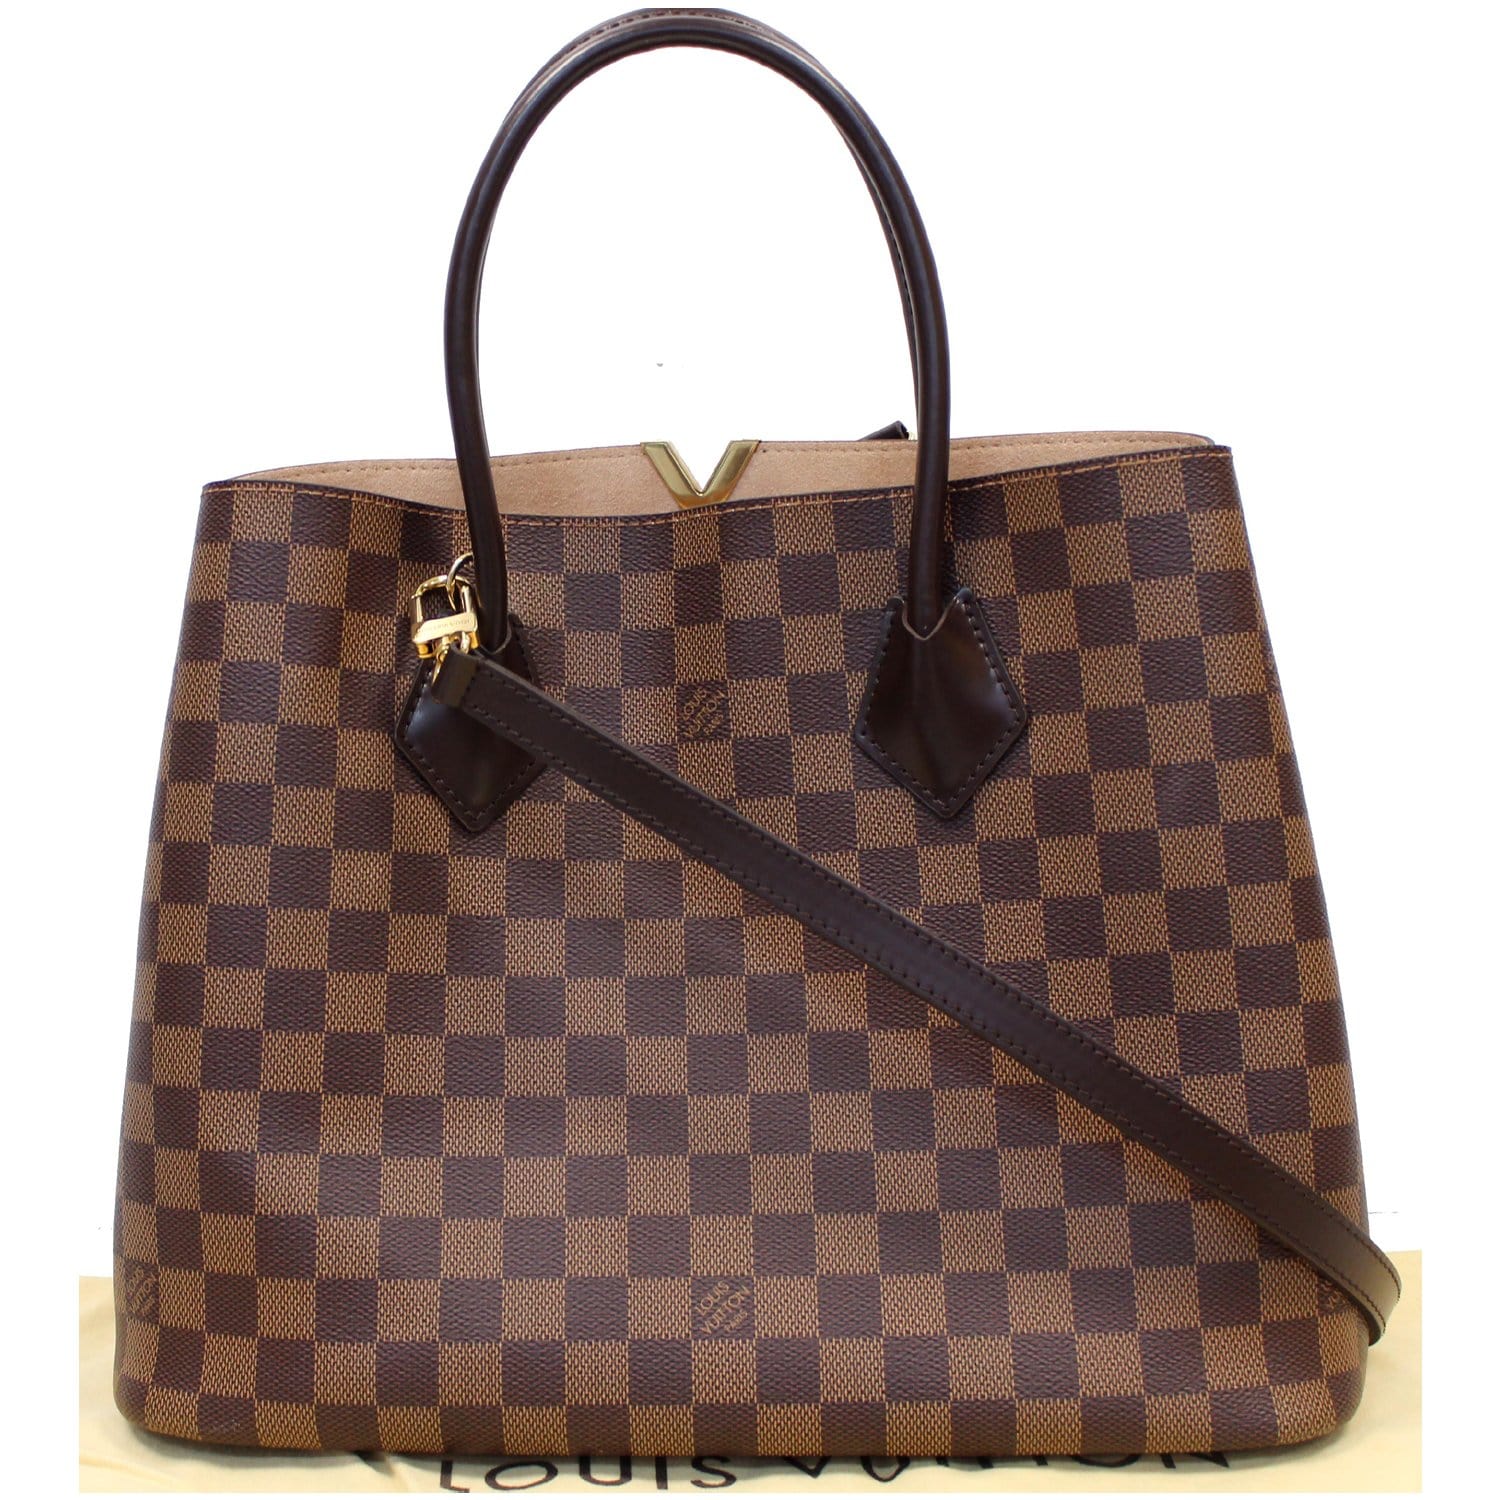 Louis Vuitton Kensington Damier Ebene 2 Way Brown - $1600 - From Fancy